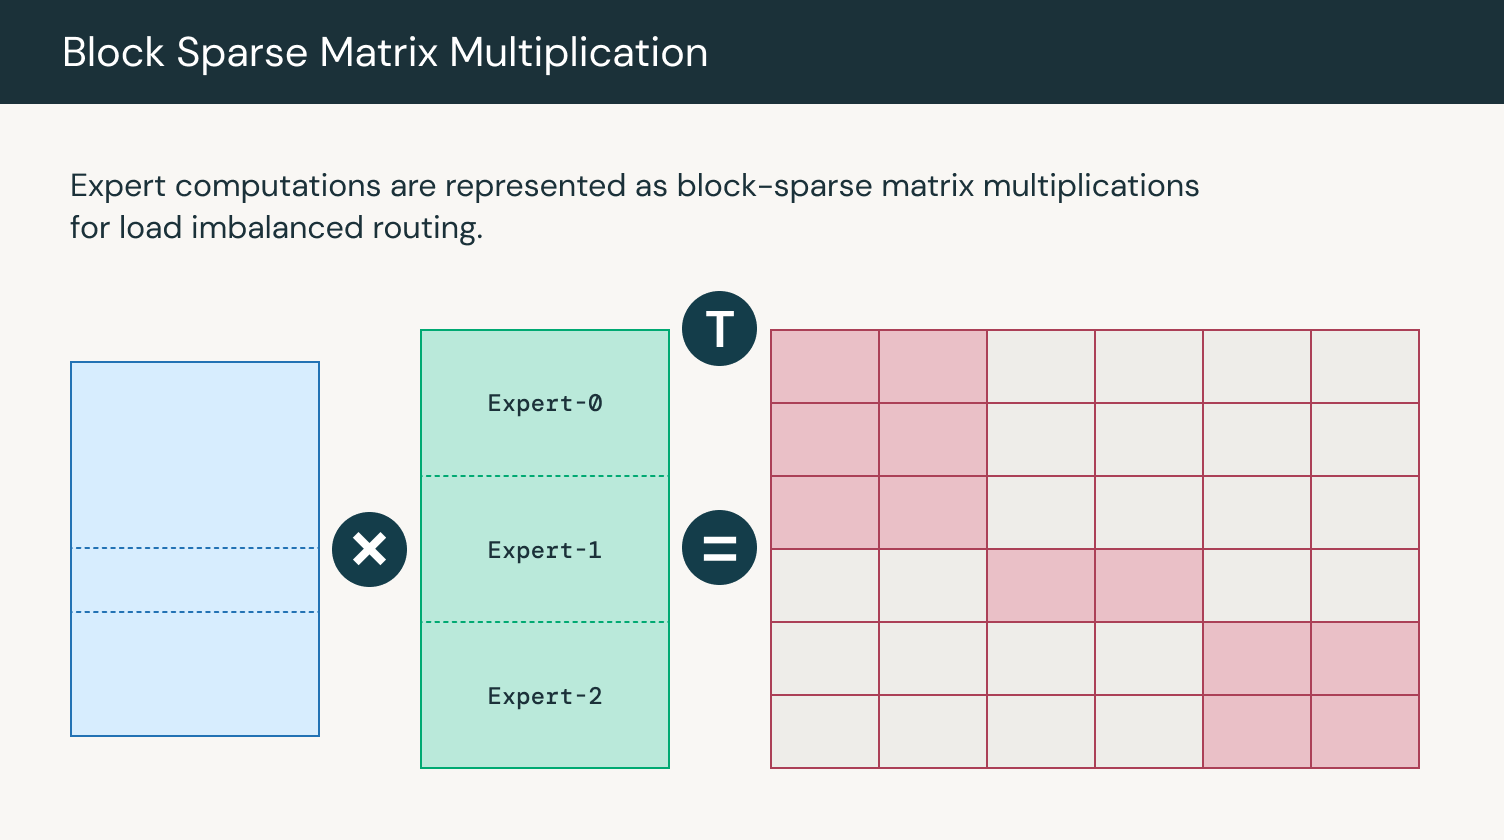 Figure 2: Matrix multiplication for expert computations